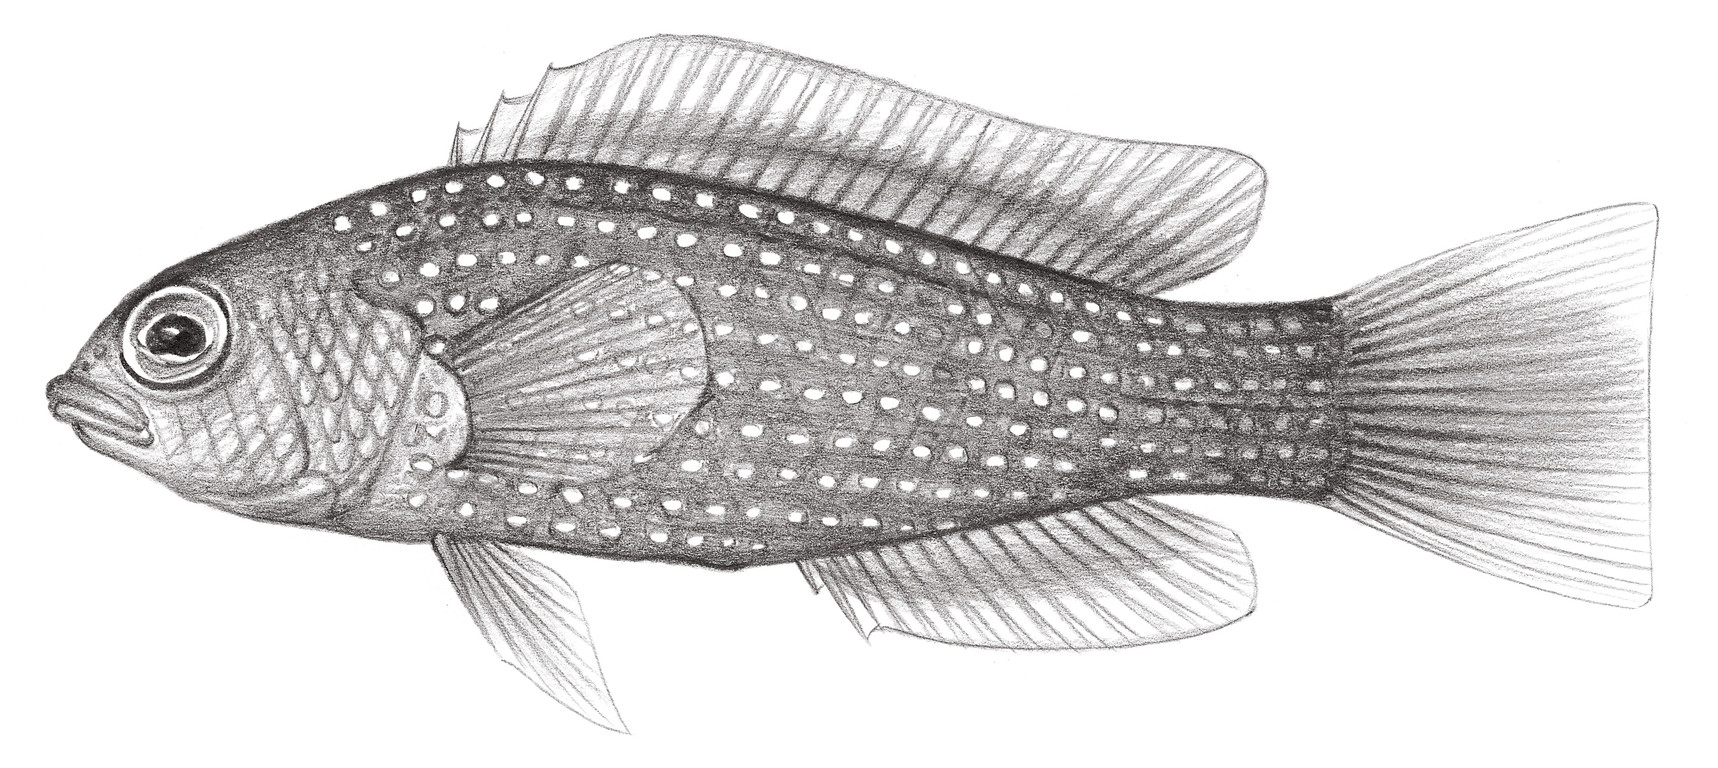 1104.	馬島准雀鯛 Pseudochromis marshallensis Schultz, 1953